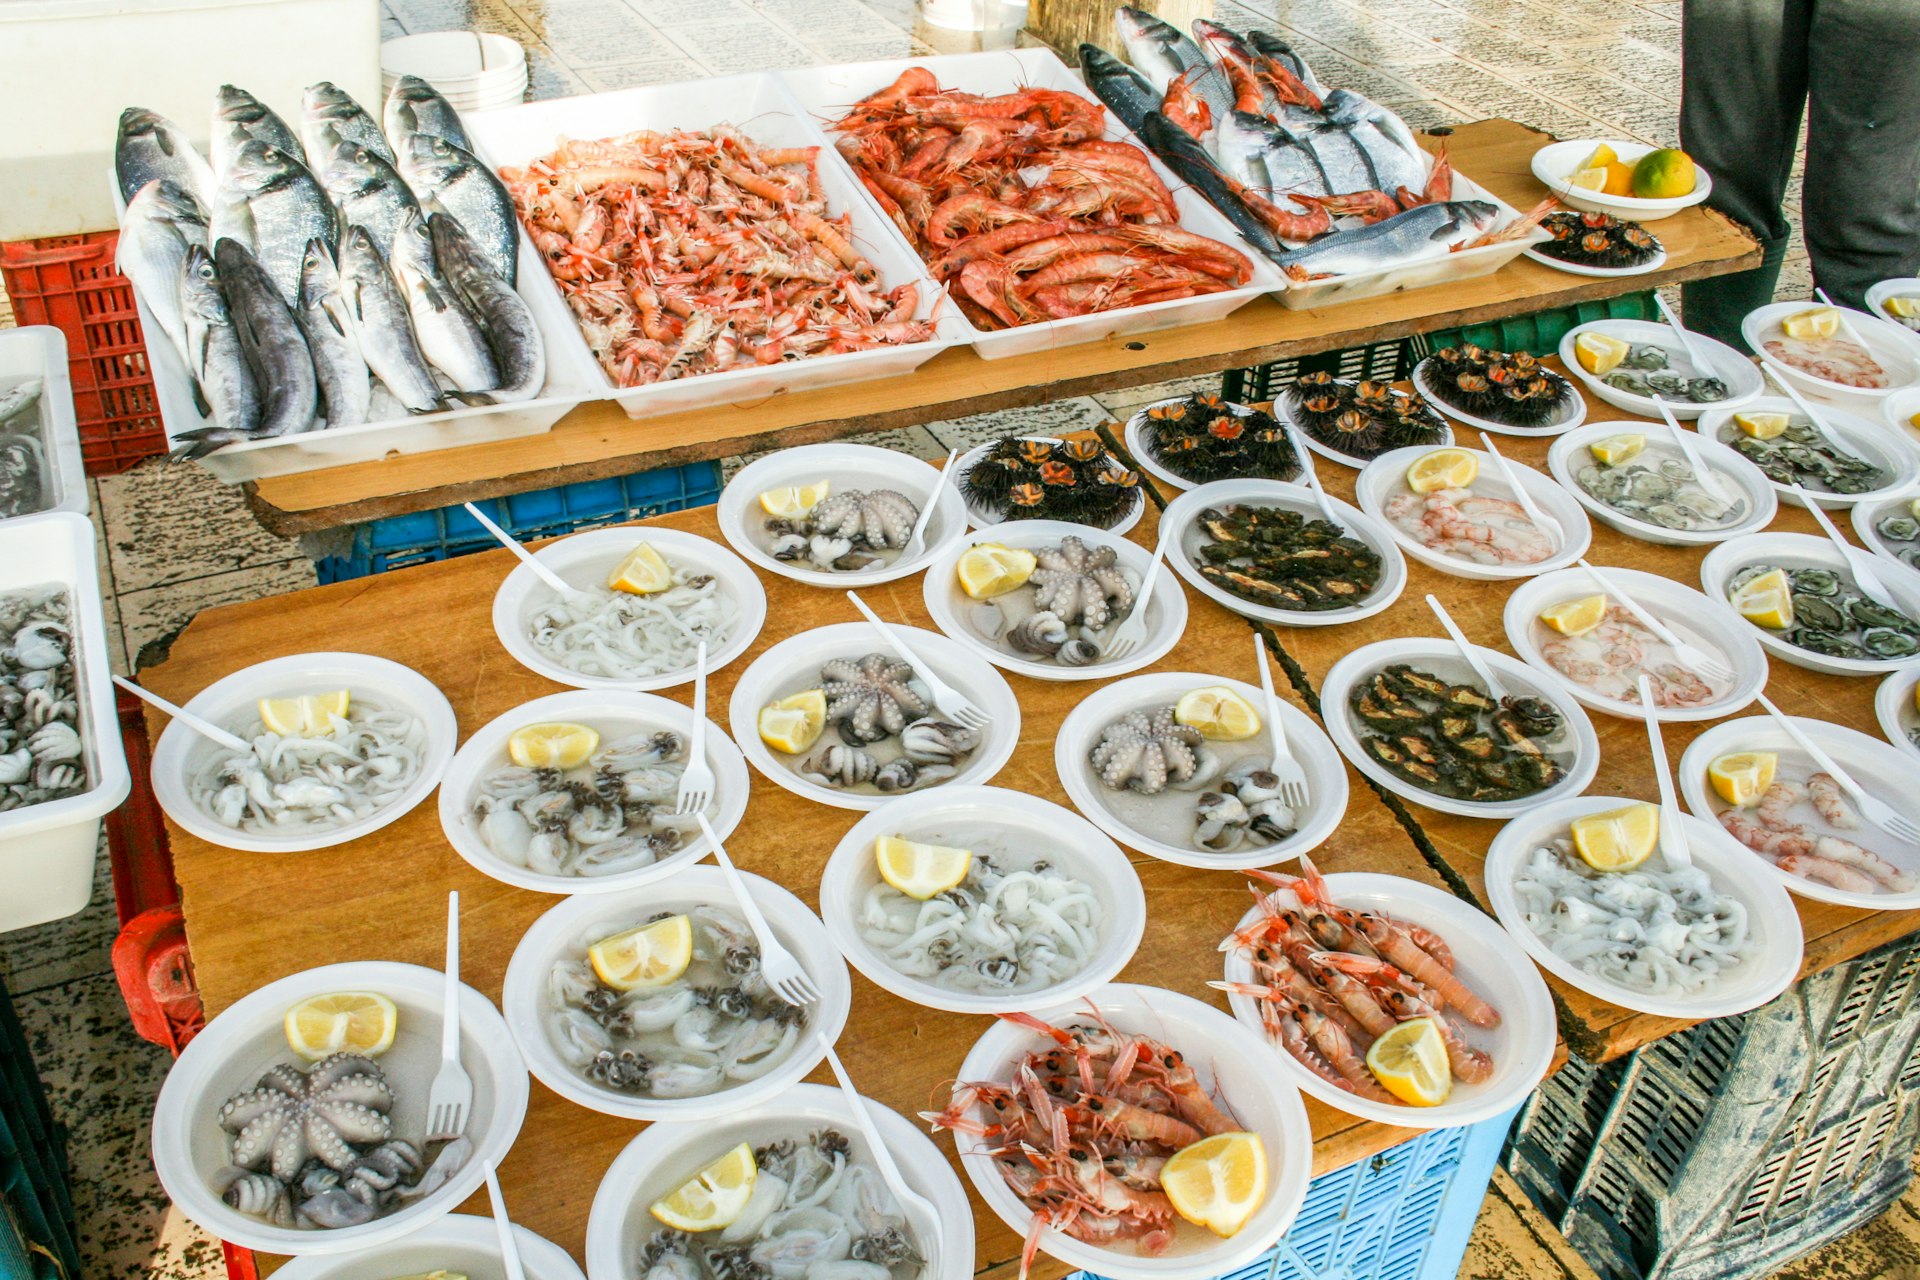 Open air street food fish market on Bari promenade with raw fresh fish ready to eat